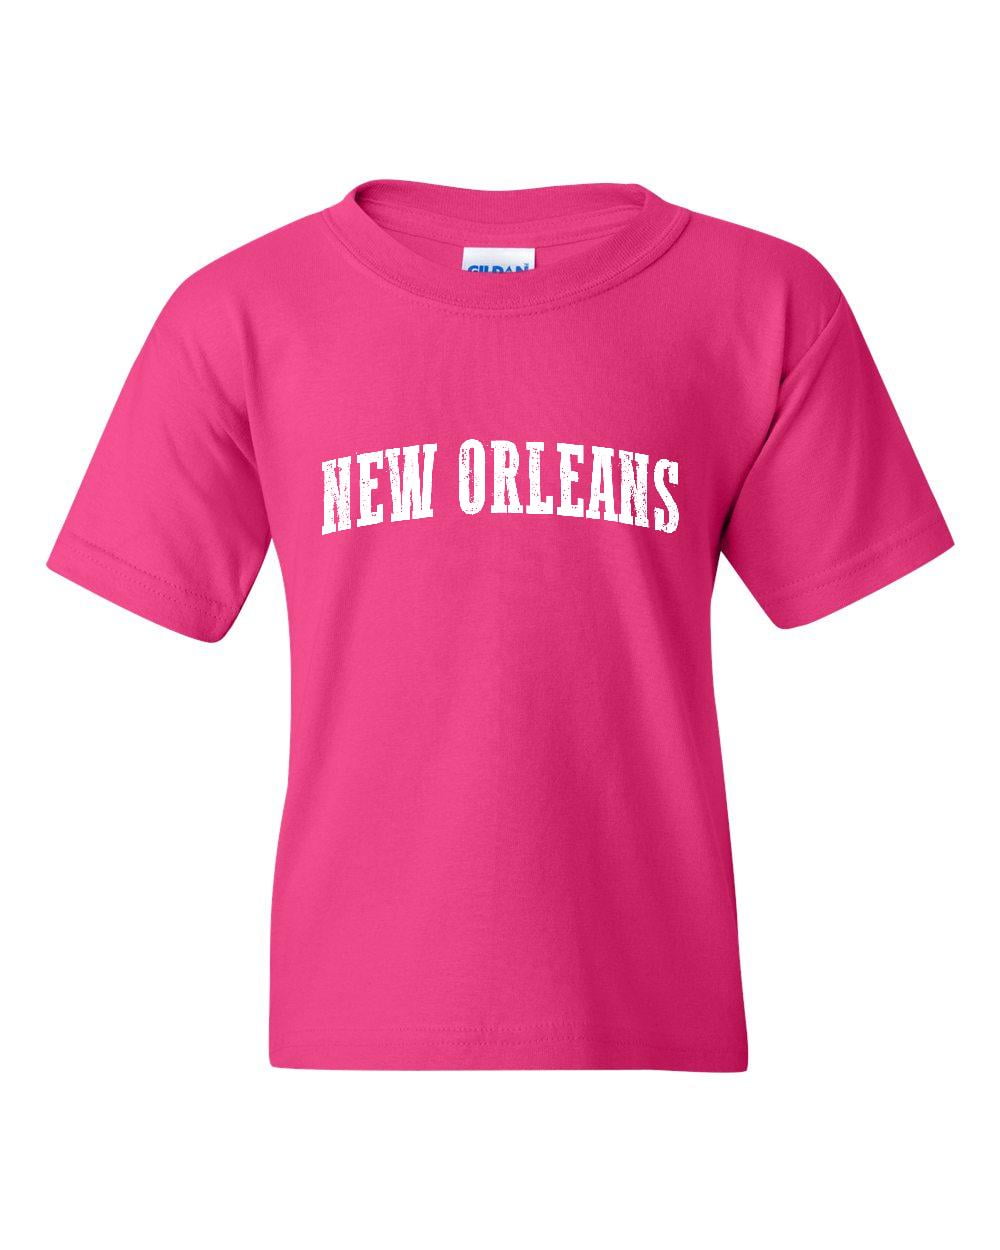 Artix - Big Girls T-Shirts and Tank Tops - New Orleans - Walmart.com